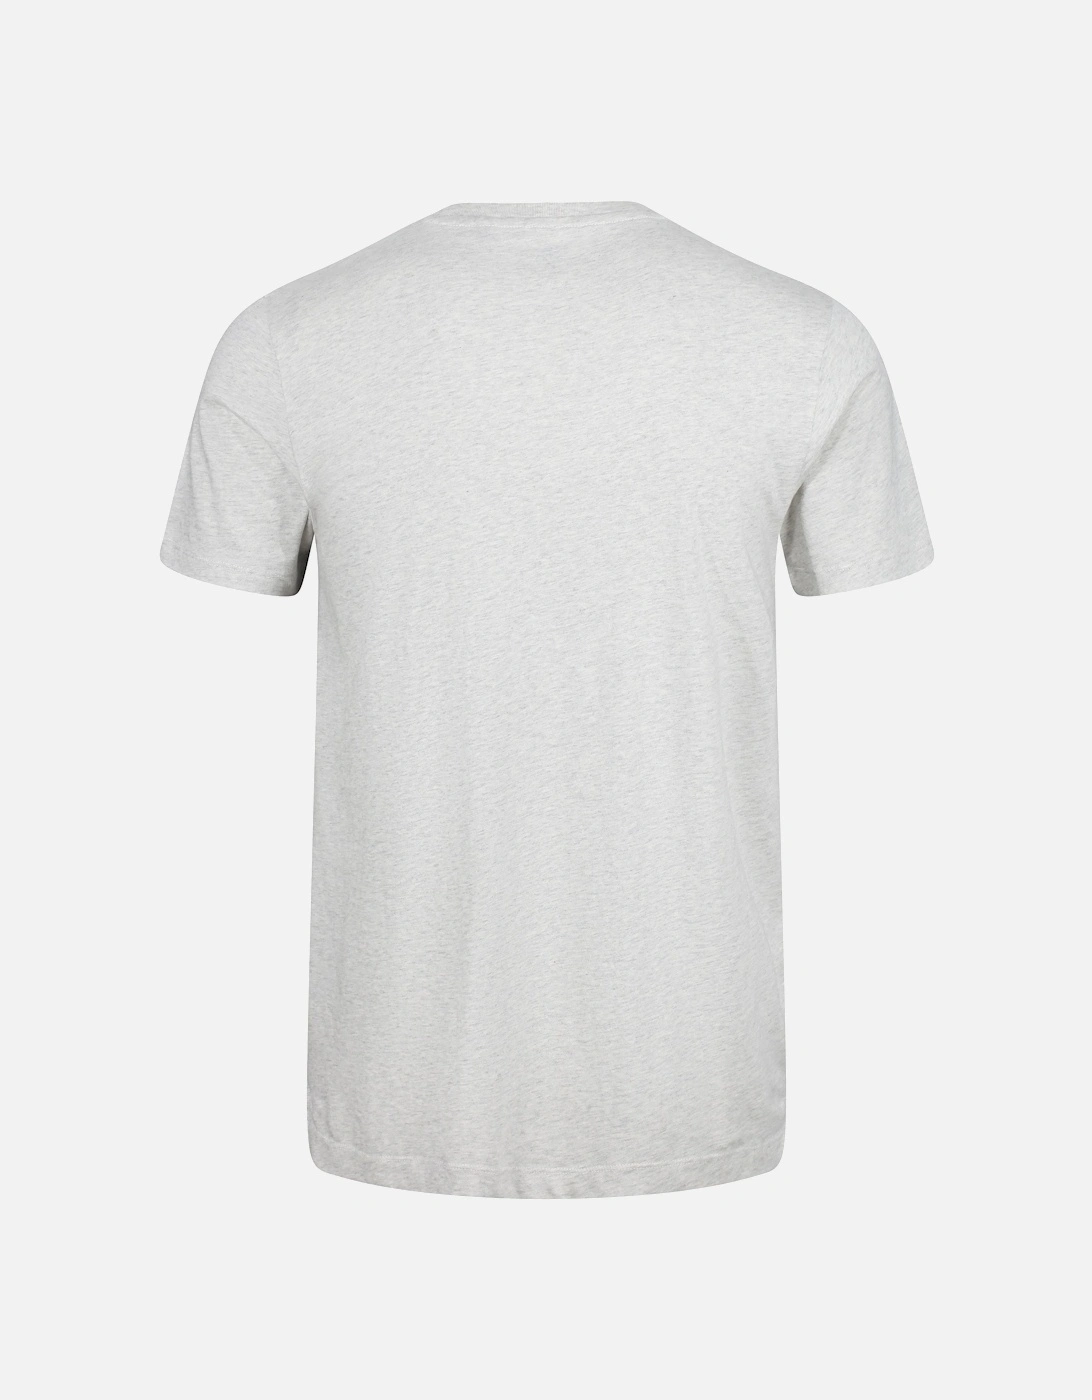 Gusty Geometric Print T-Shirt | Marl Grey Mix